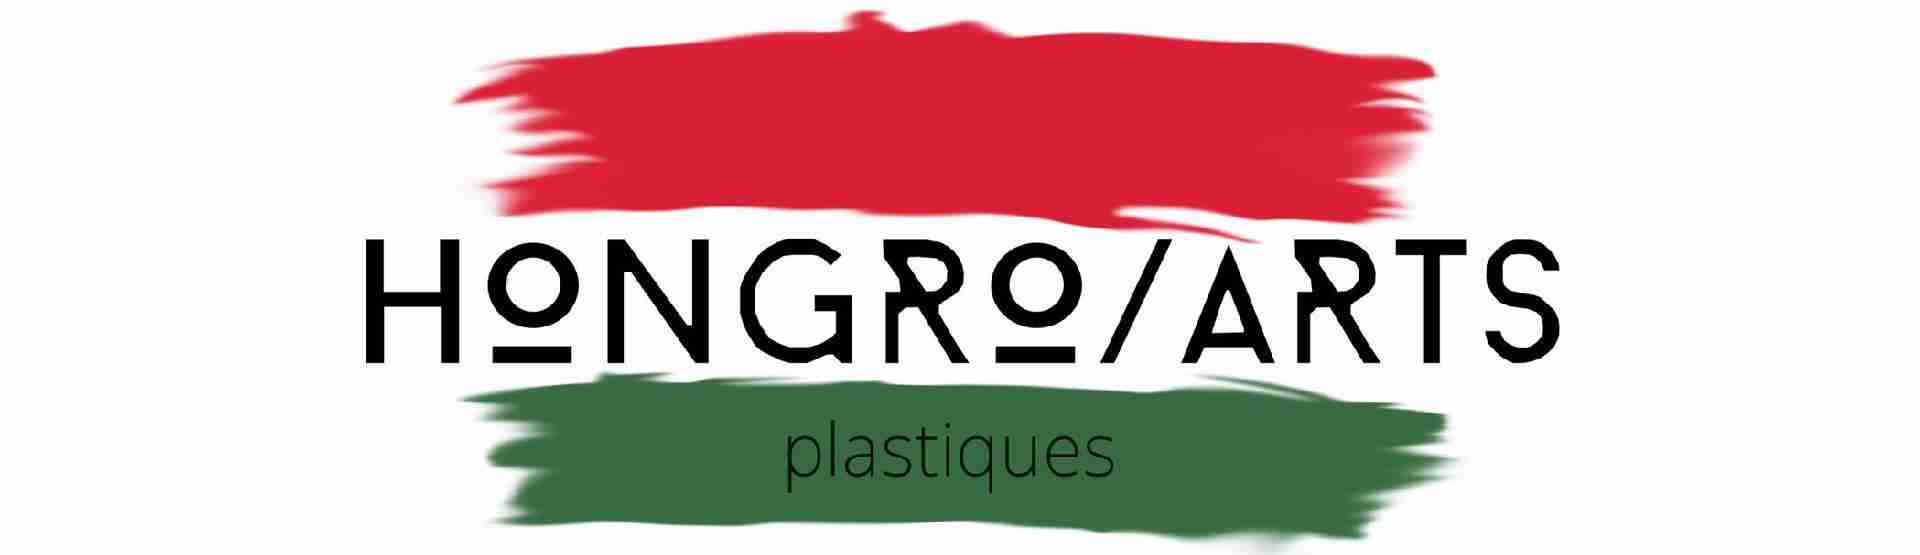 
HongroARTS/plastique 